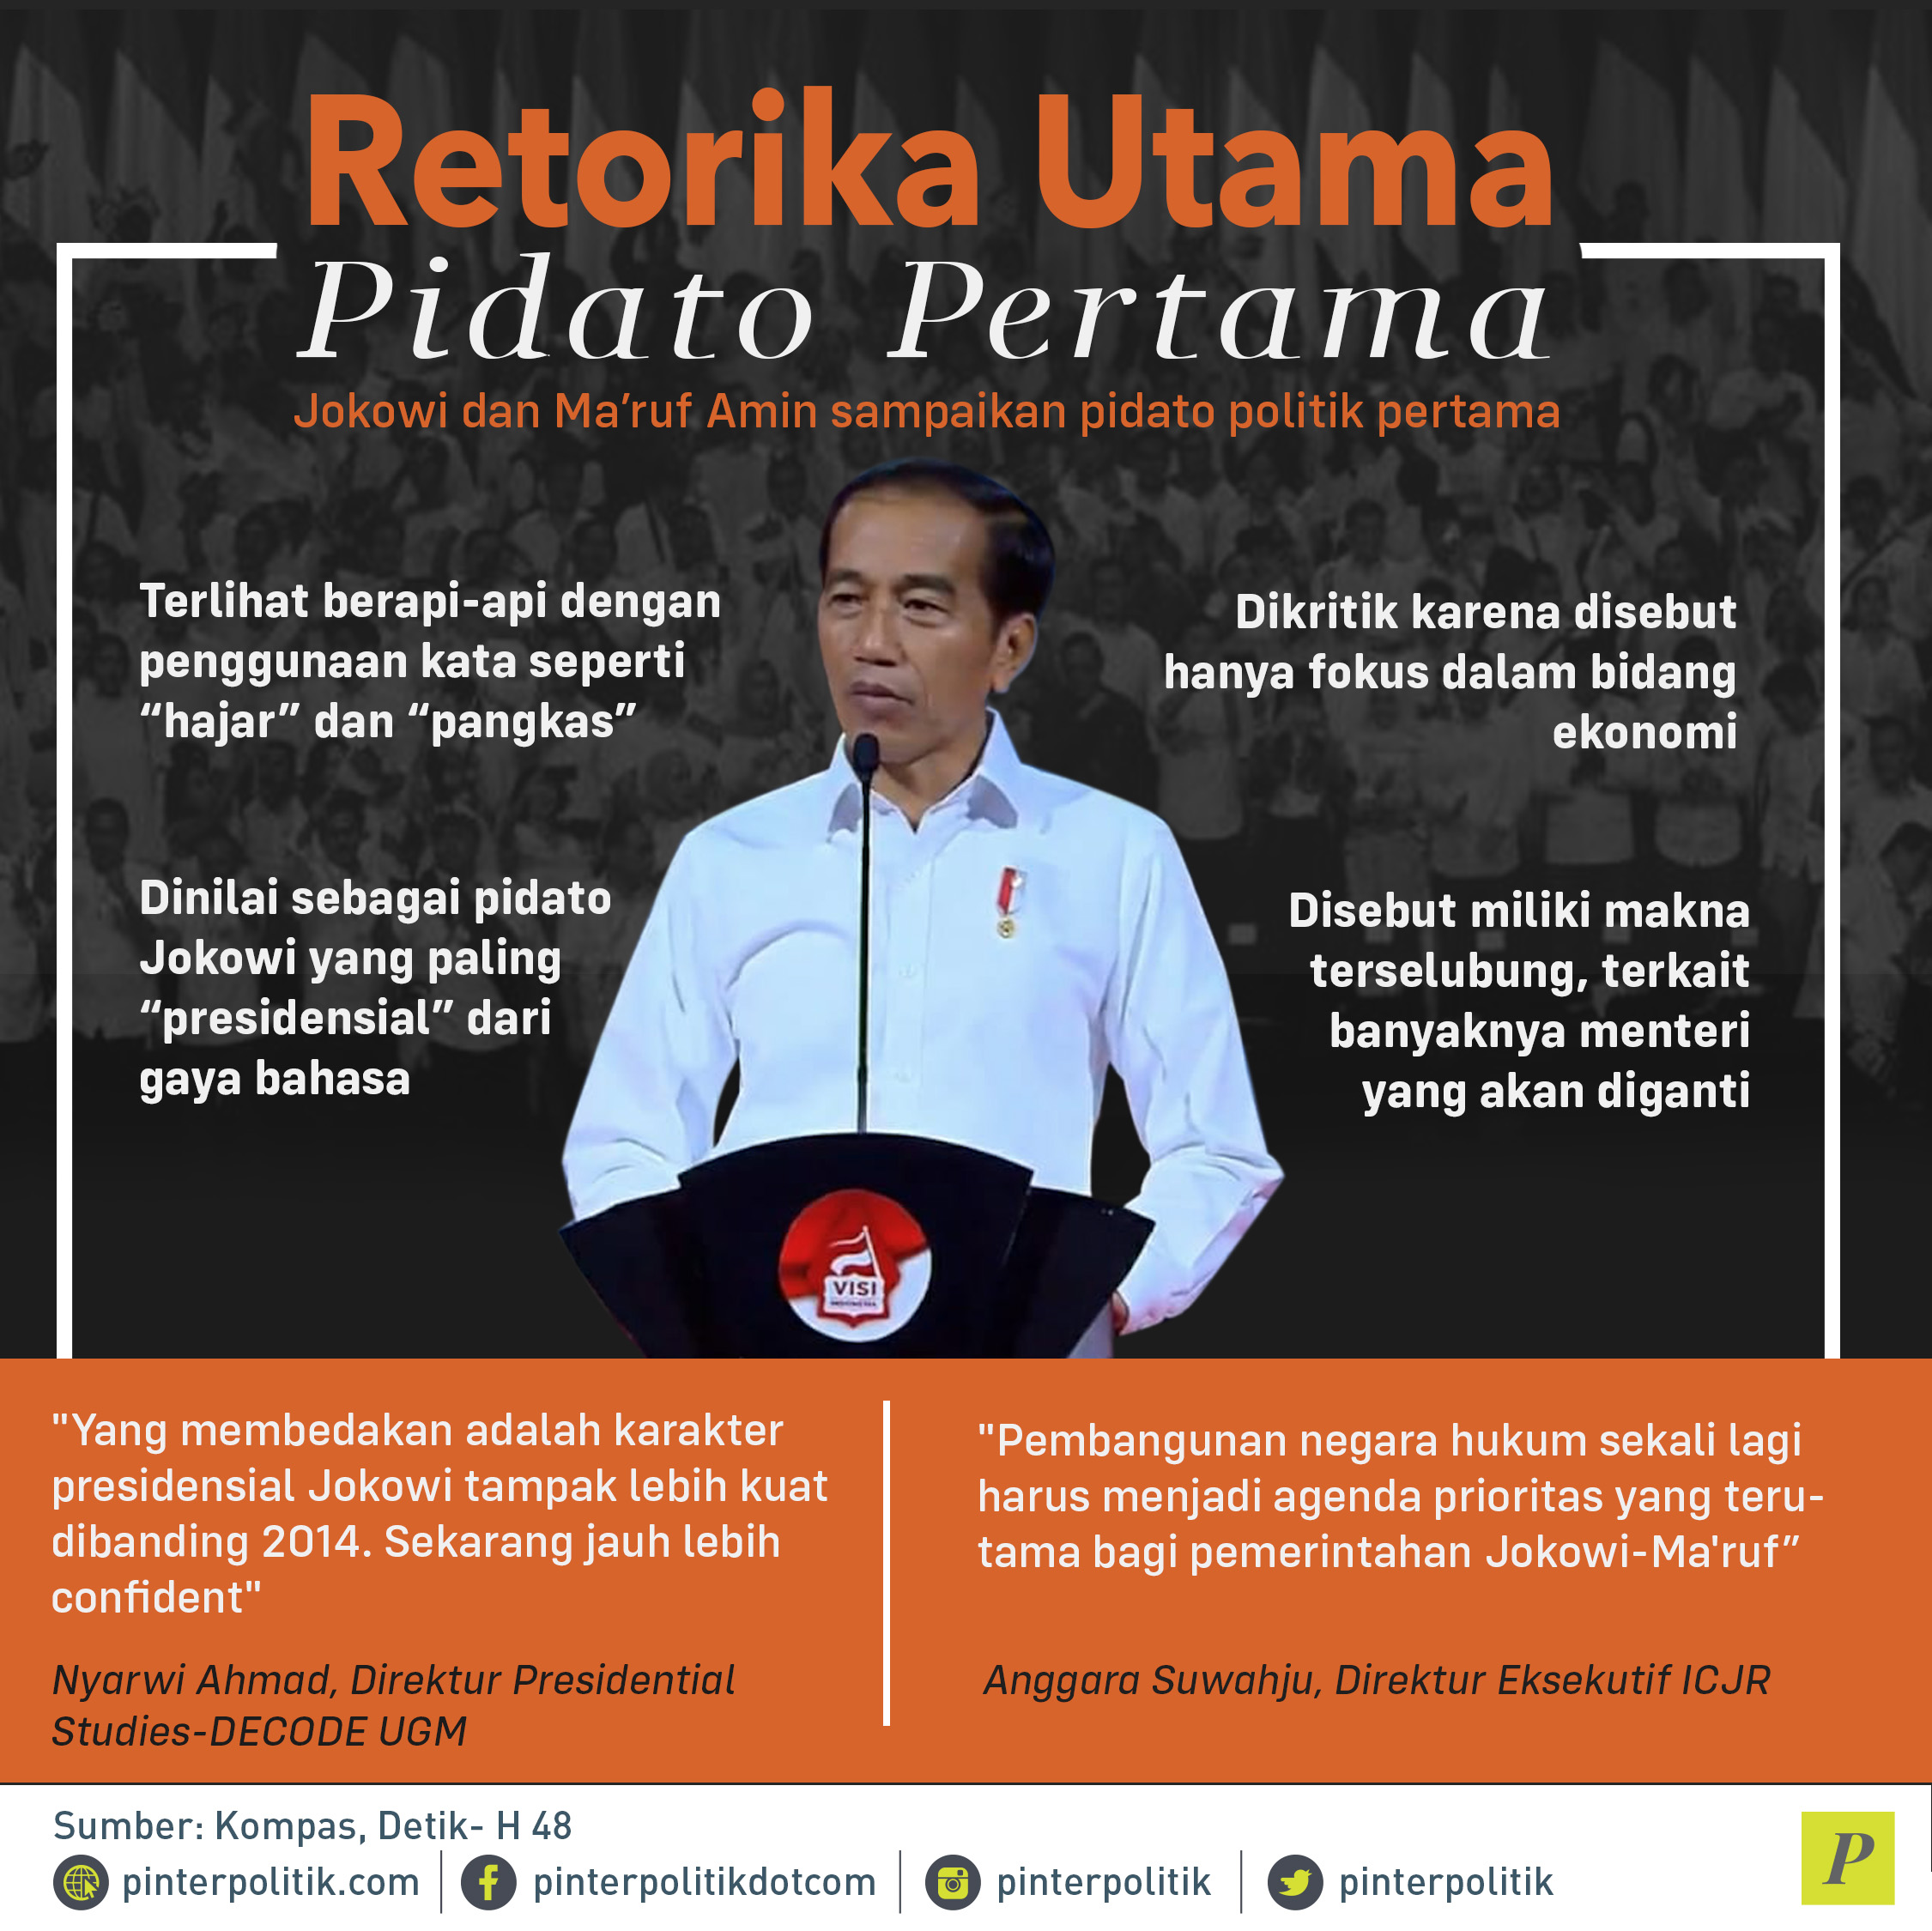 Jokowi dan Ma'ruf Amin sampaikan pidato politik pertama